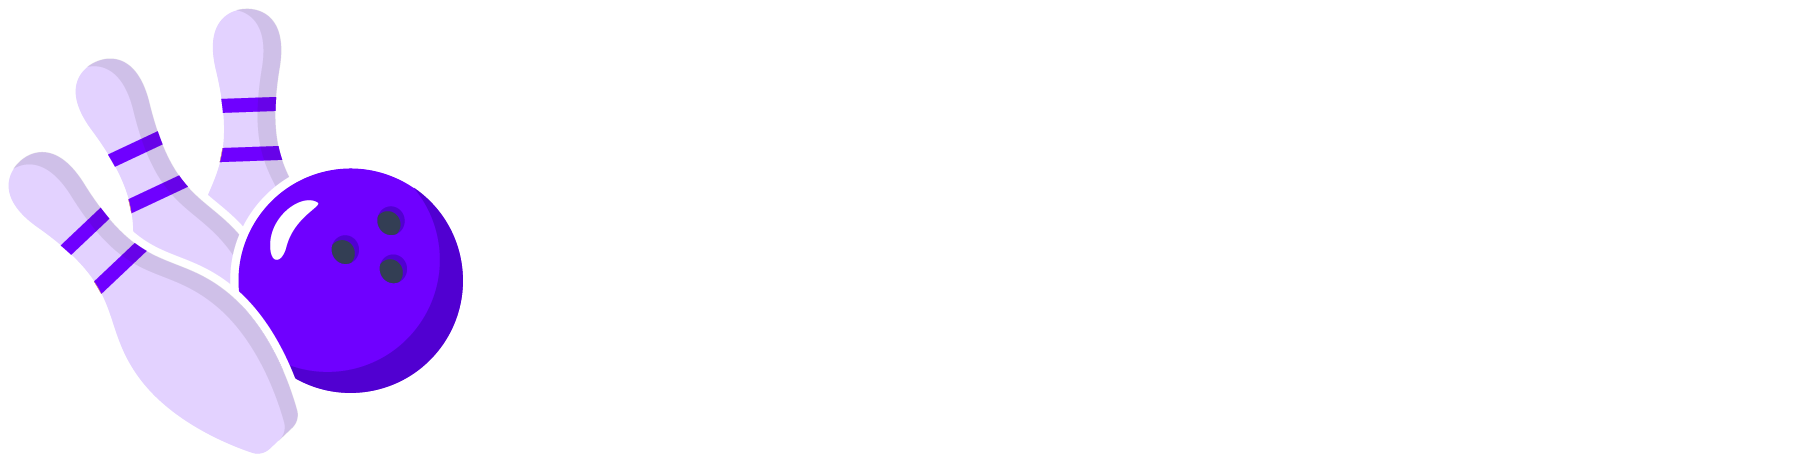 bowling westerpark logo lowercase 2 white